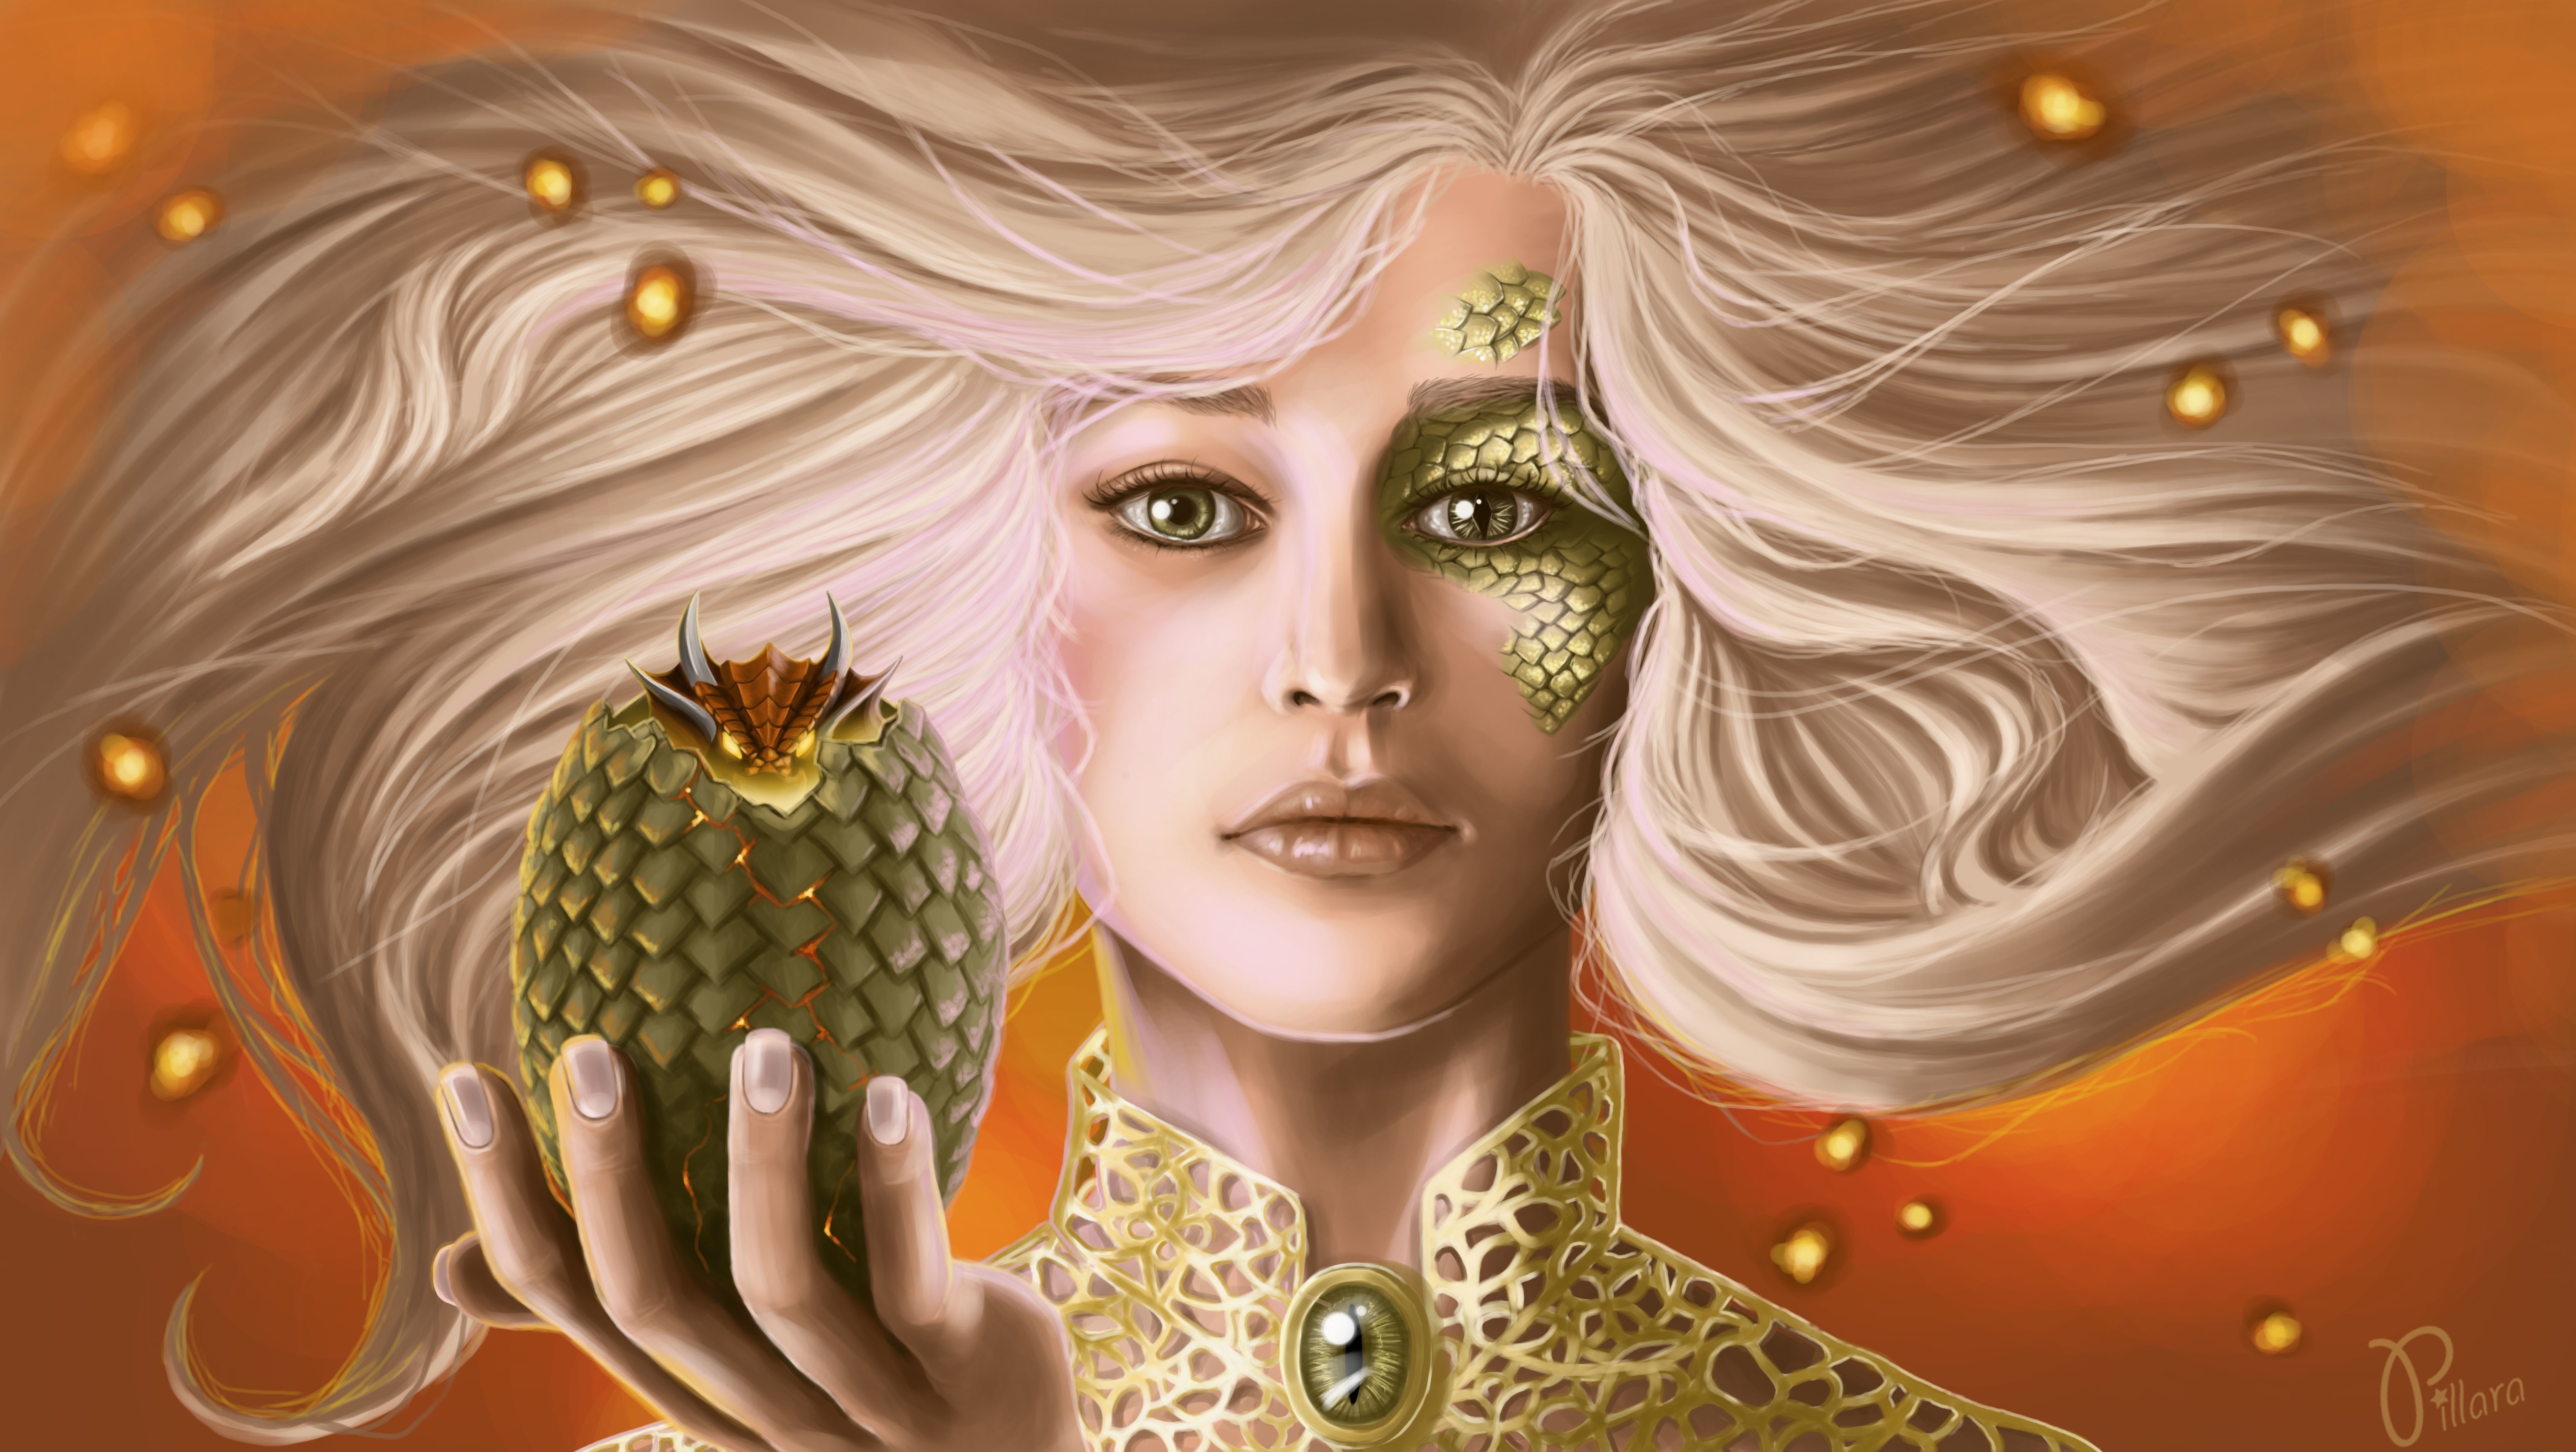 General 6192x3491 artwork fantasy art fantasy girl dragon blonde long hair women face digital art closeup watermarked